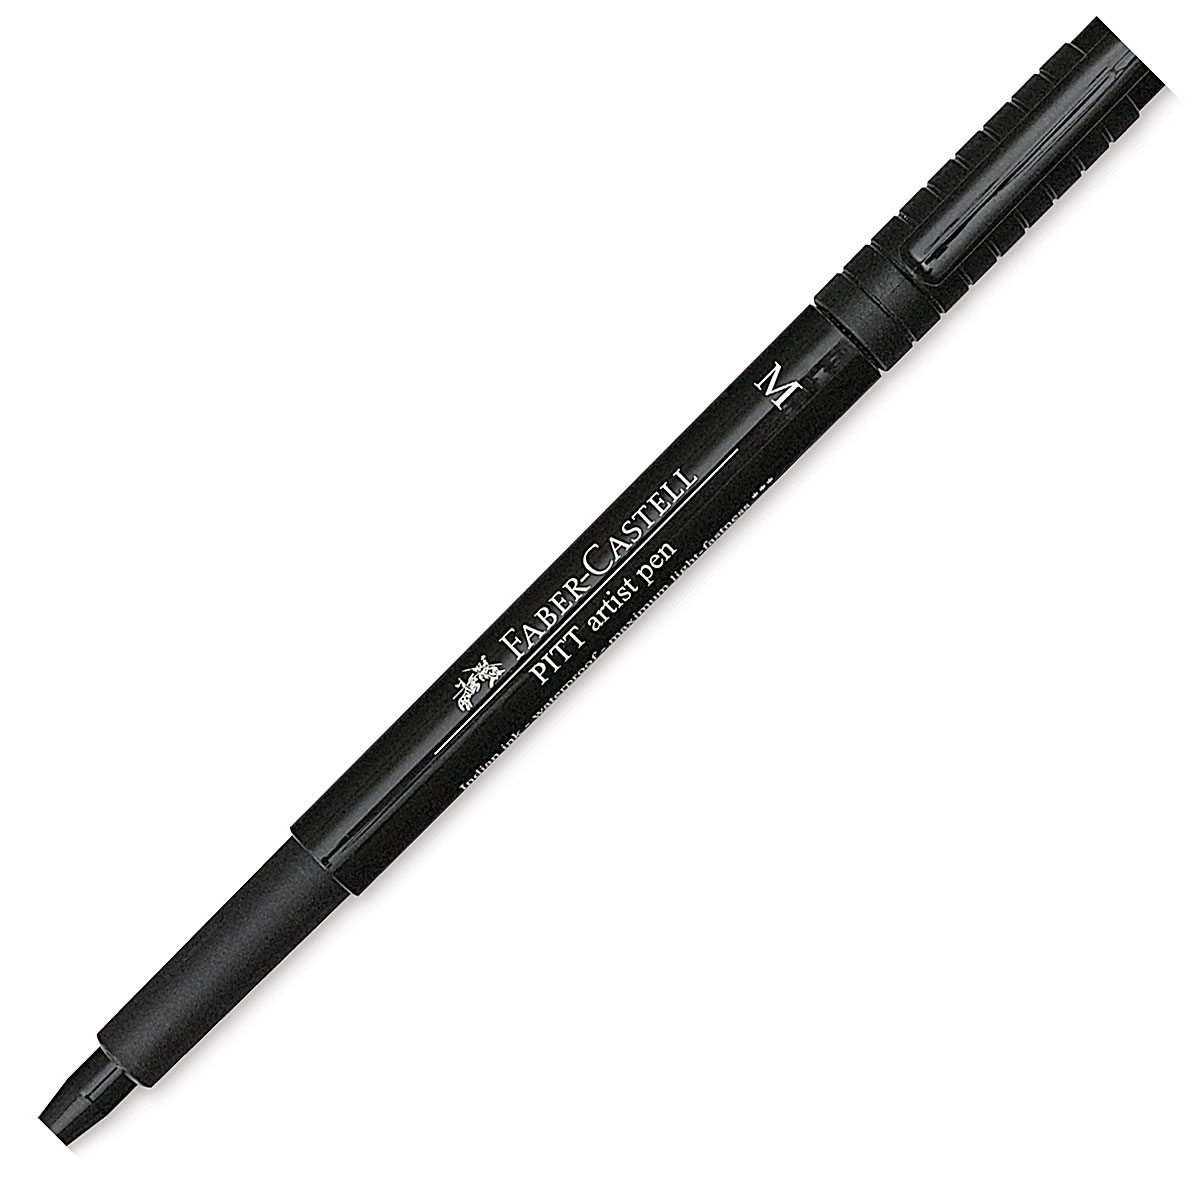 Faber-Castell Pitt Artist Pen - Black, Brush Nib